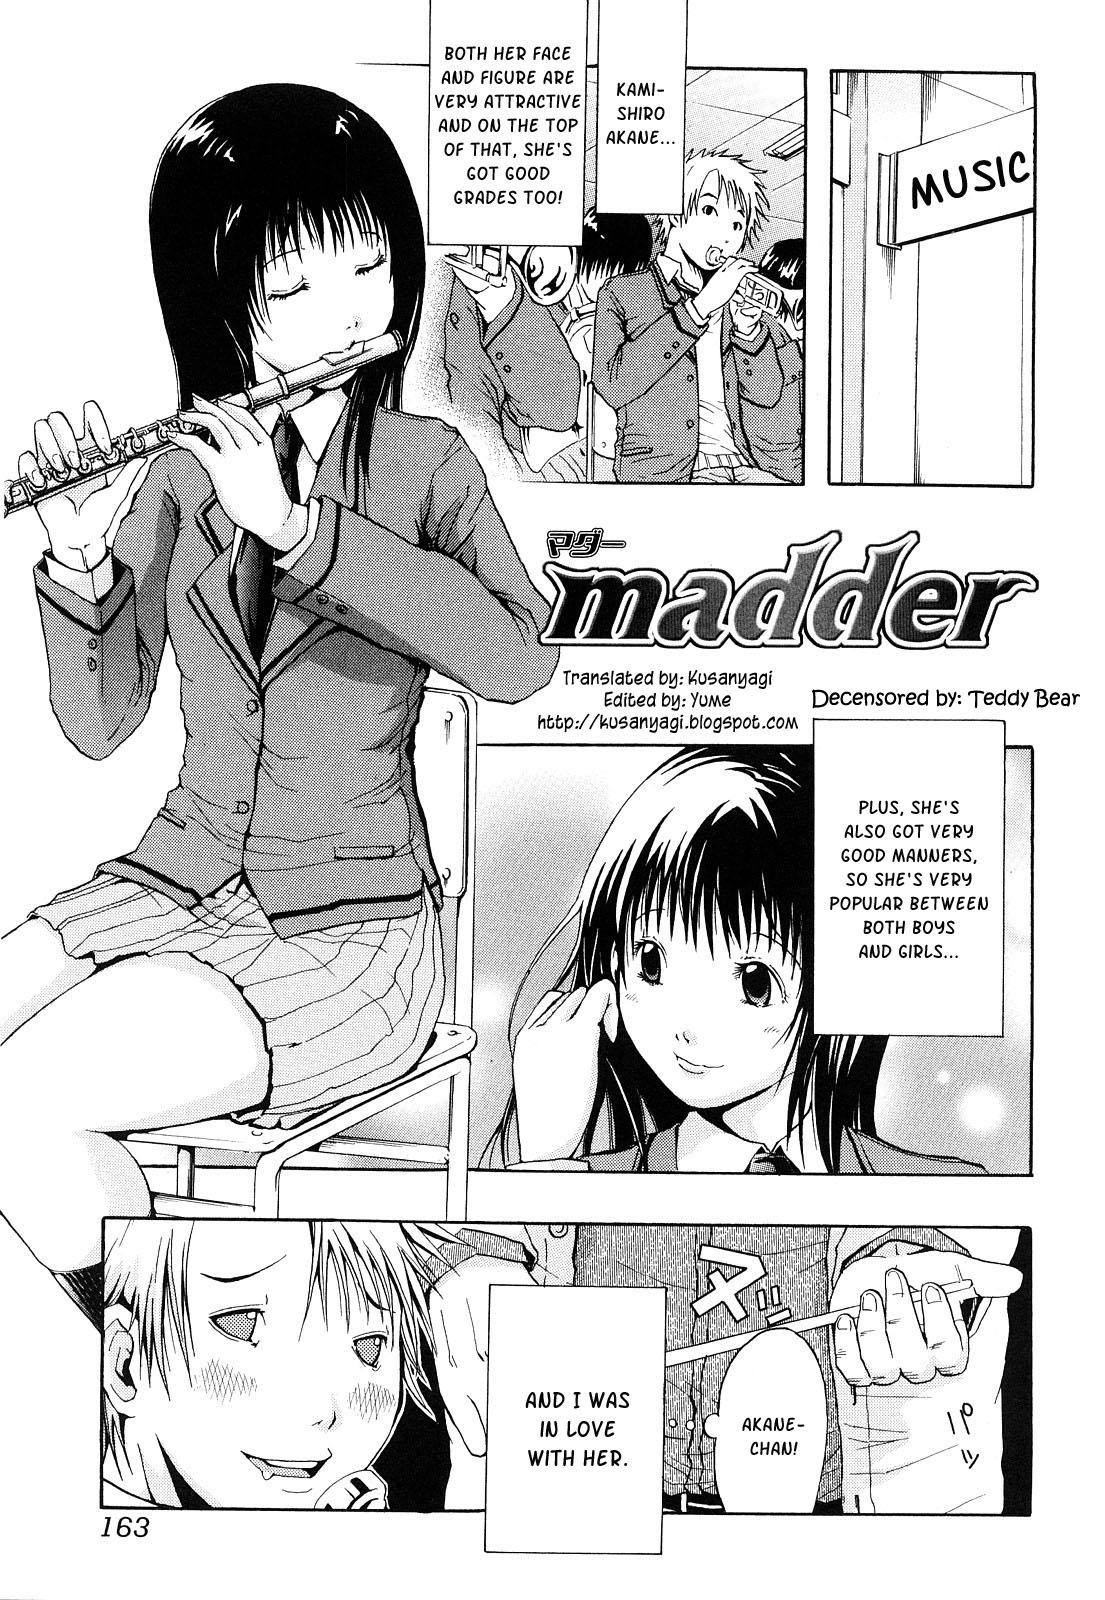 Face Sitting Madder Enema - Page 1